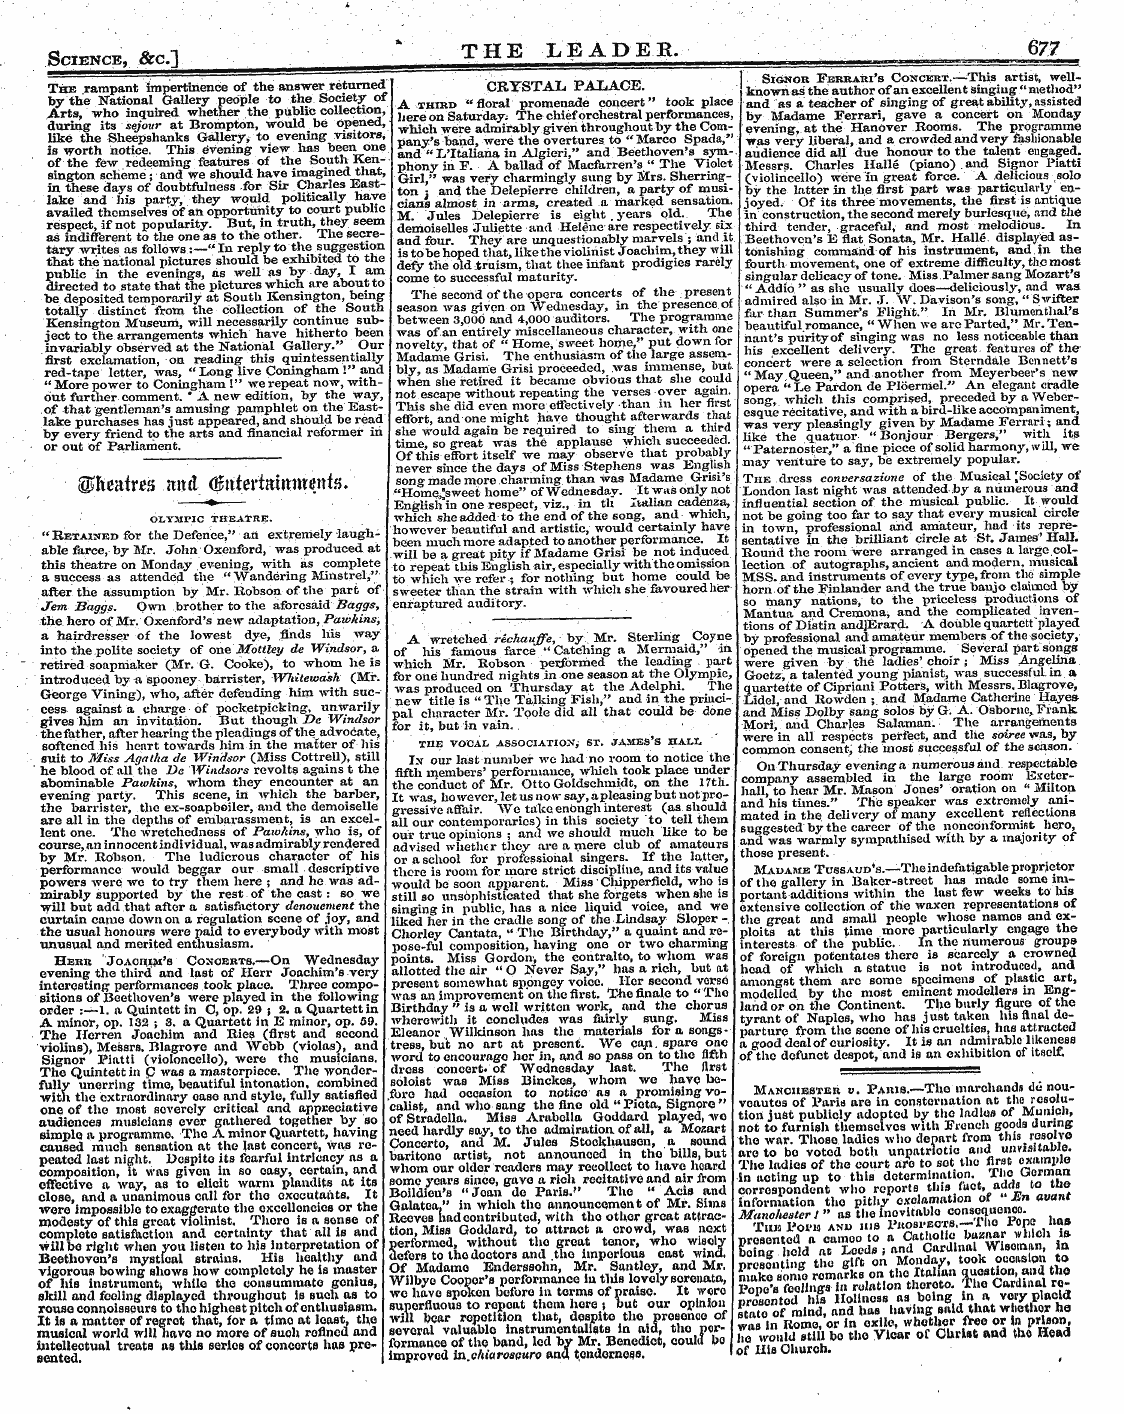 Leader (1850-1860): jS F Y, 2nd edition - (Sm&Uvus Illttl (Gmimmttltttfttts. ' ' '